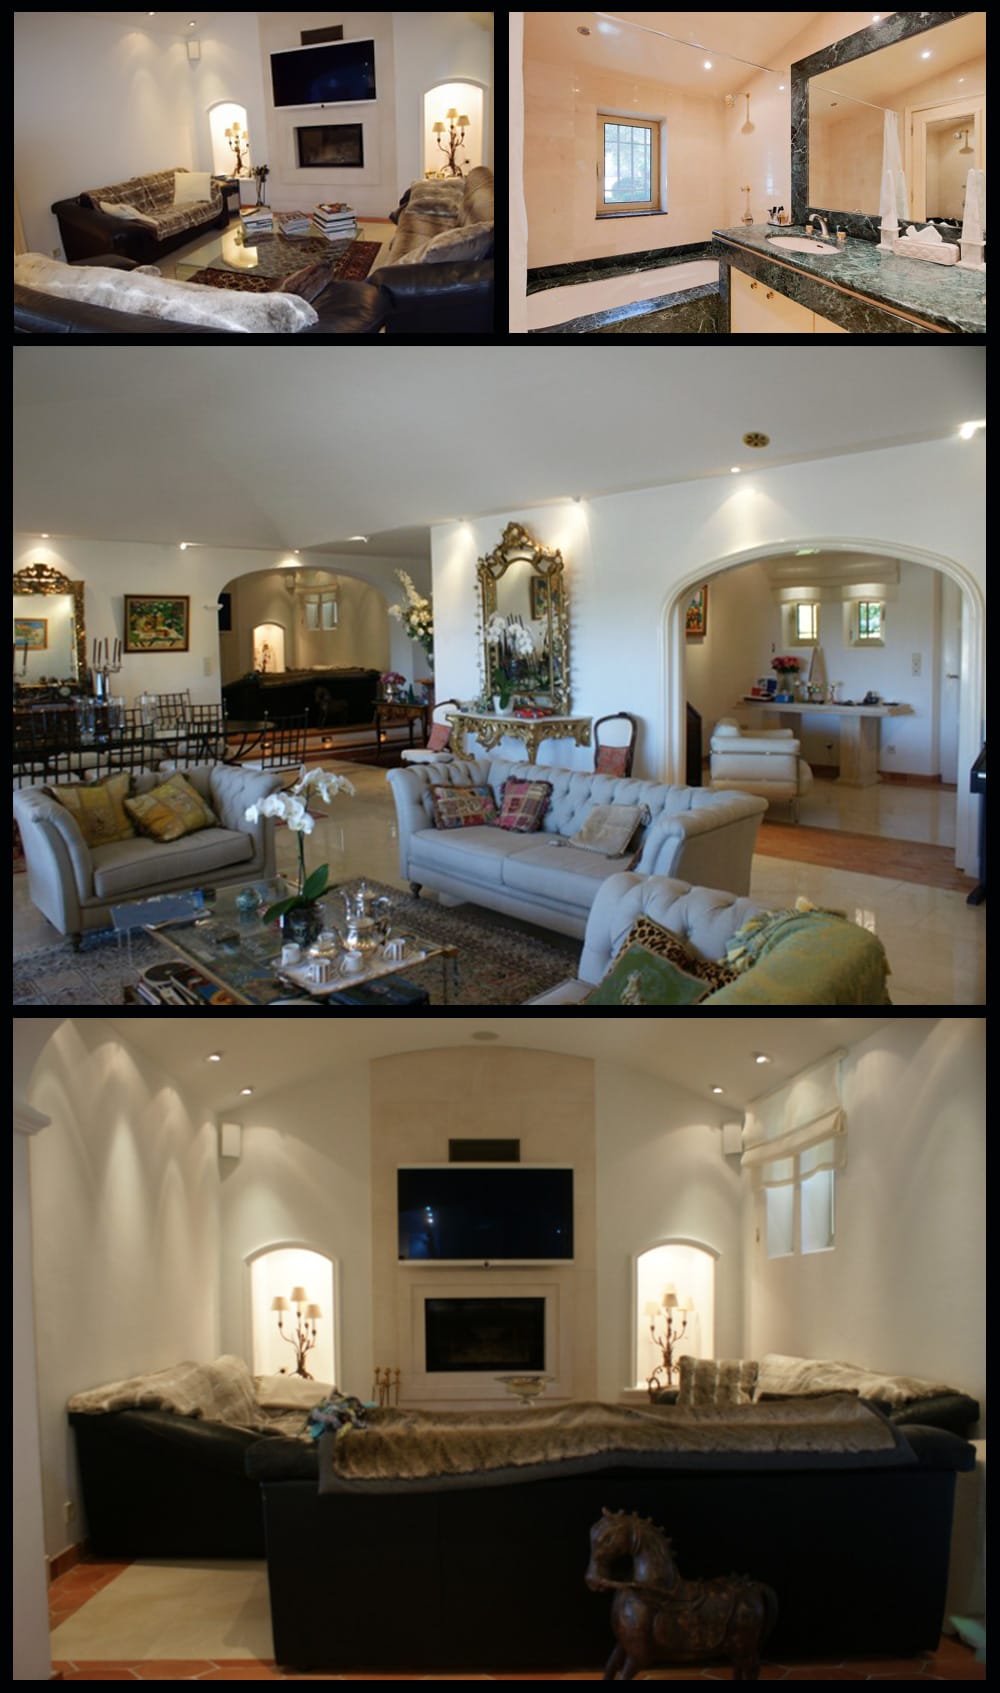 Award winning Provence villa, before renovation, dated and uninspiring, ostentatious furniture